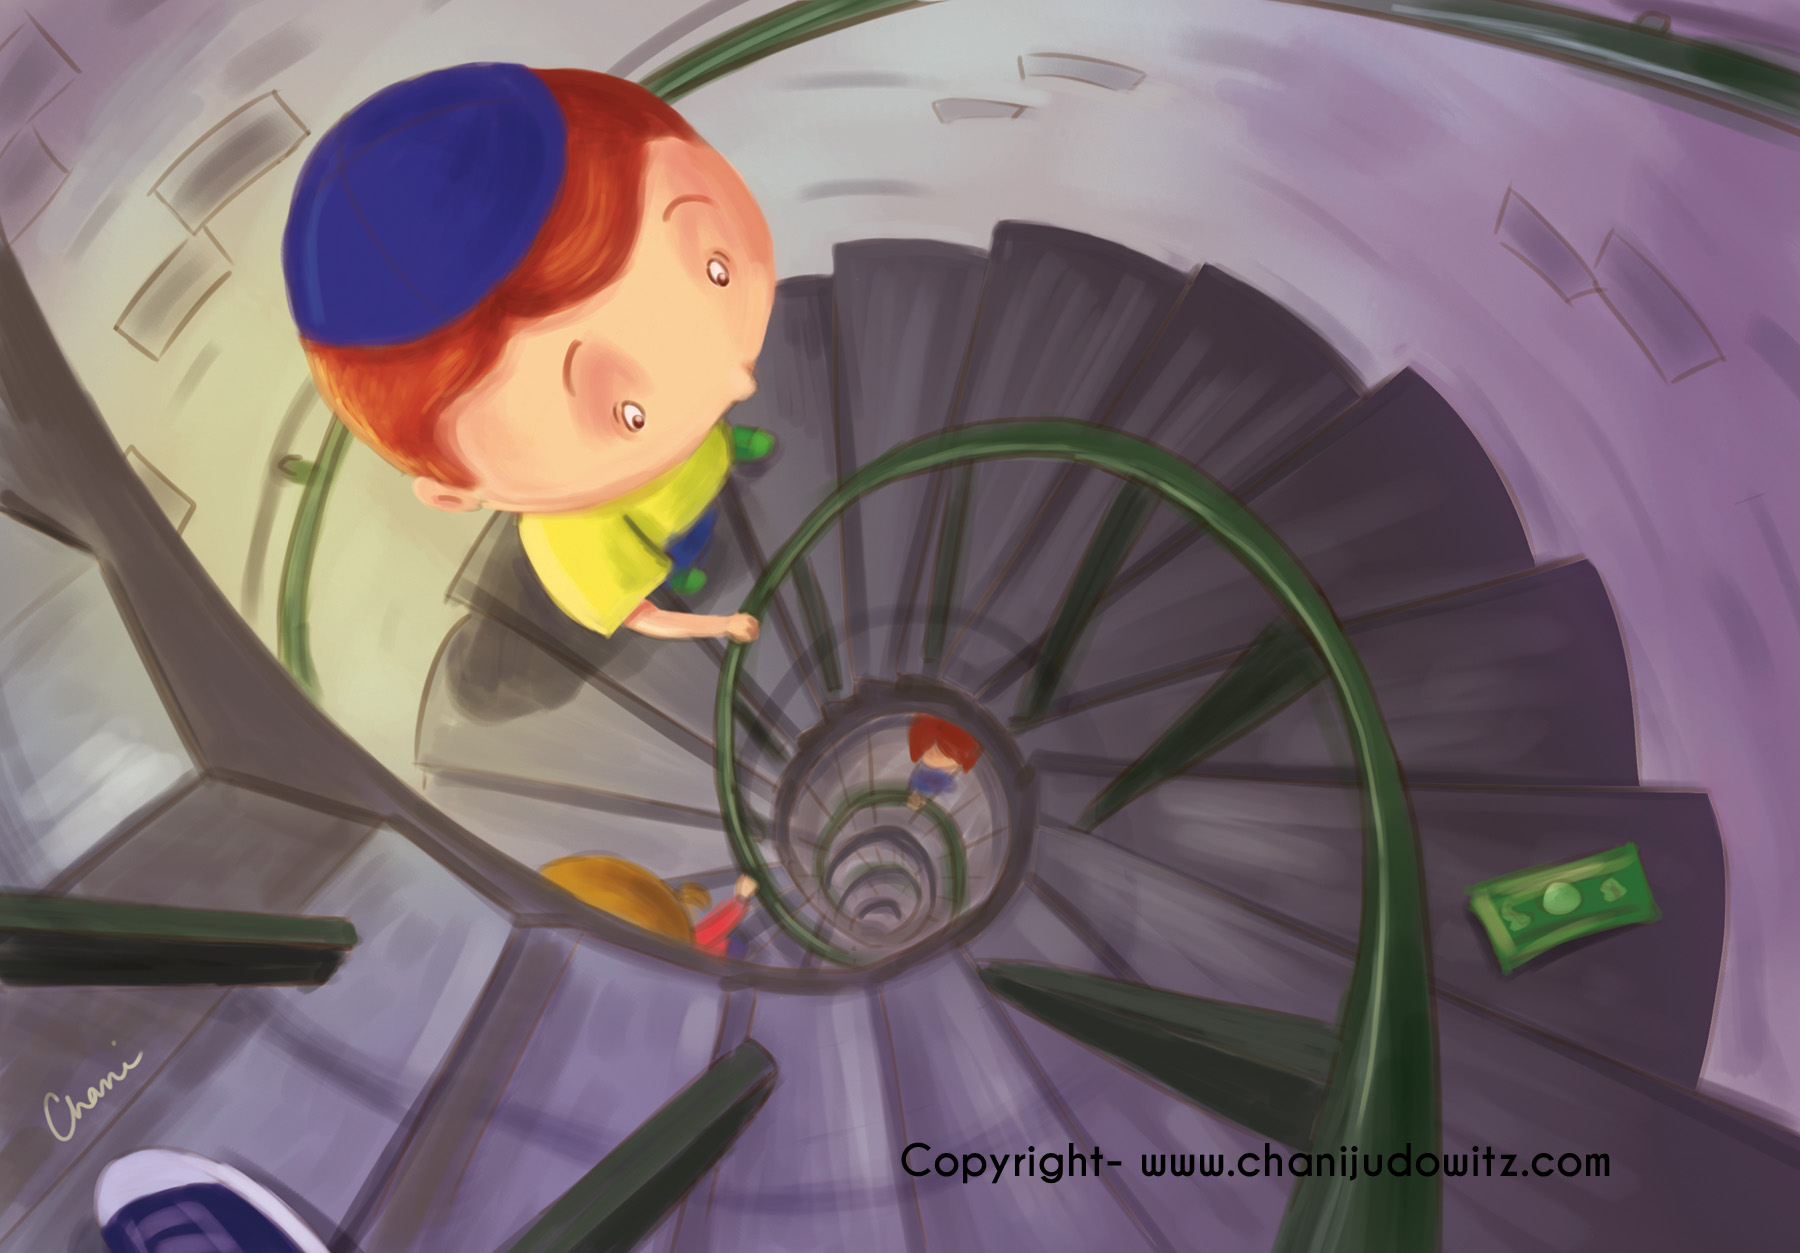 Stairs Illustration (Mishpacha Junior)